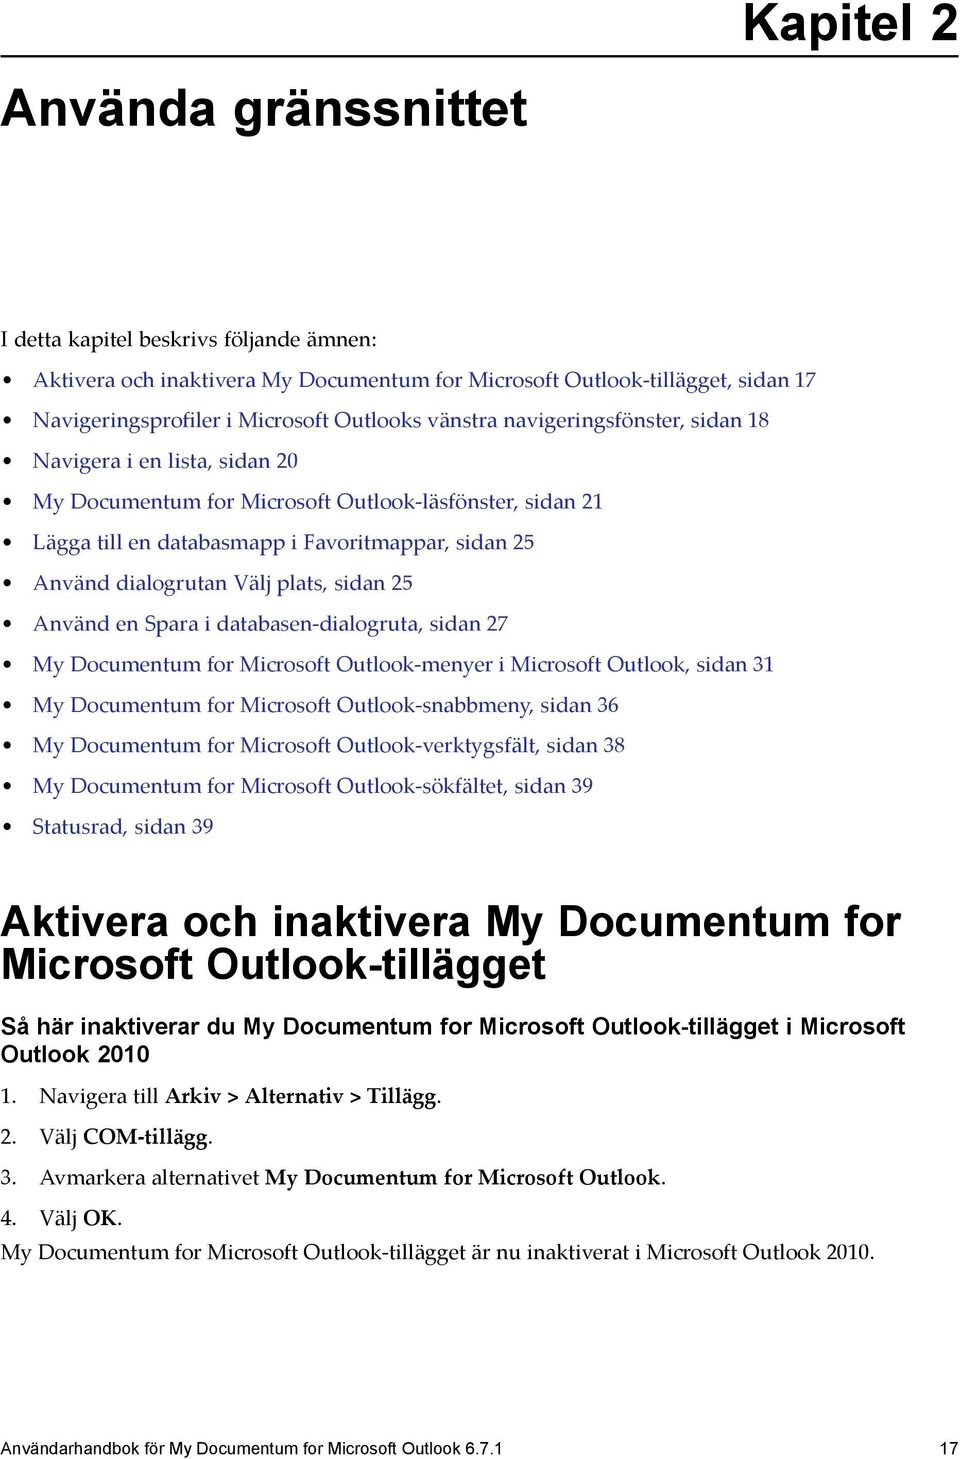 plats, sidan 25 Använd en Spara i databasen-dialogruta, sidan 27 My Documentum for Microsoft Outlook-menyer i Microsoft Outlook, sidan 31 My Documentum for Microsoft Outlook-snabbmeny, sidan 36 My